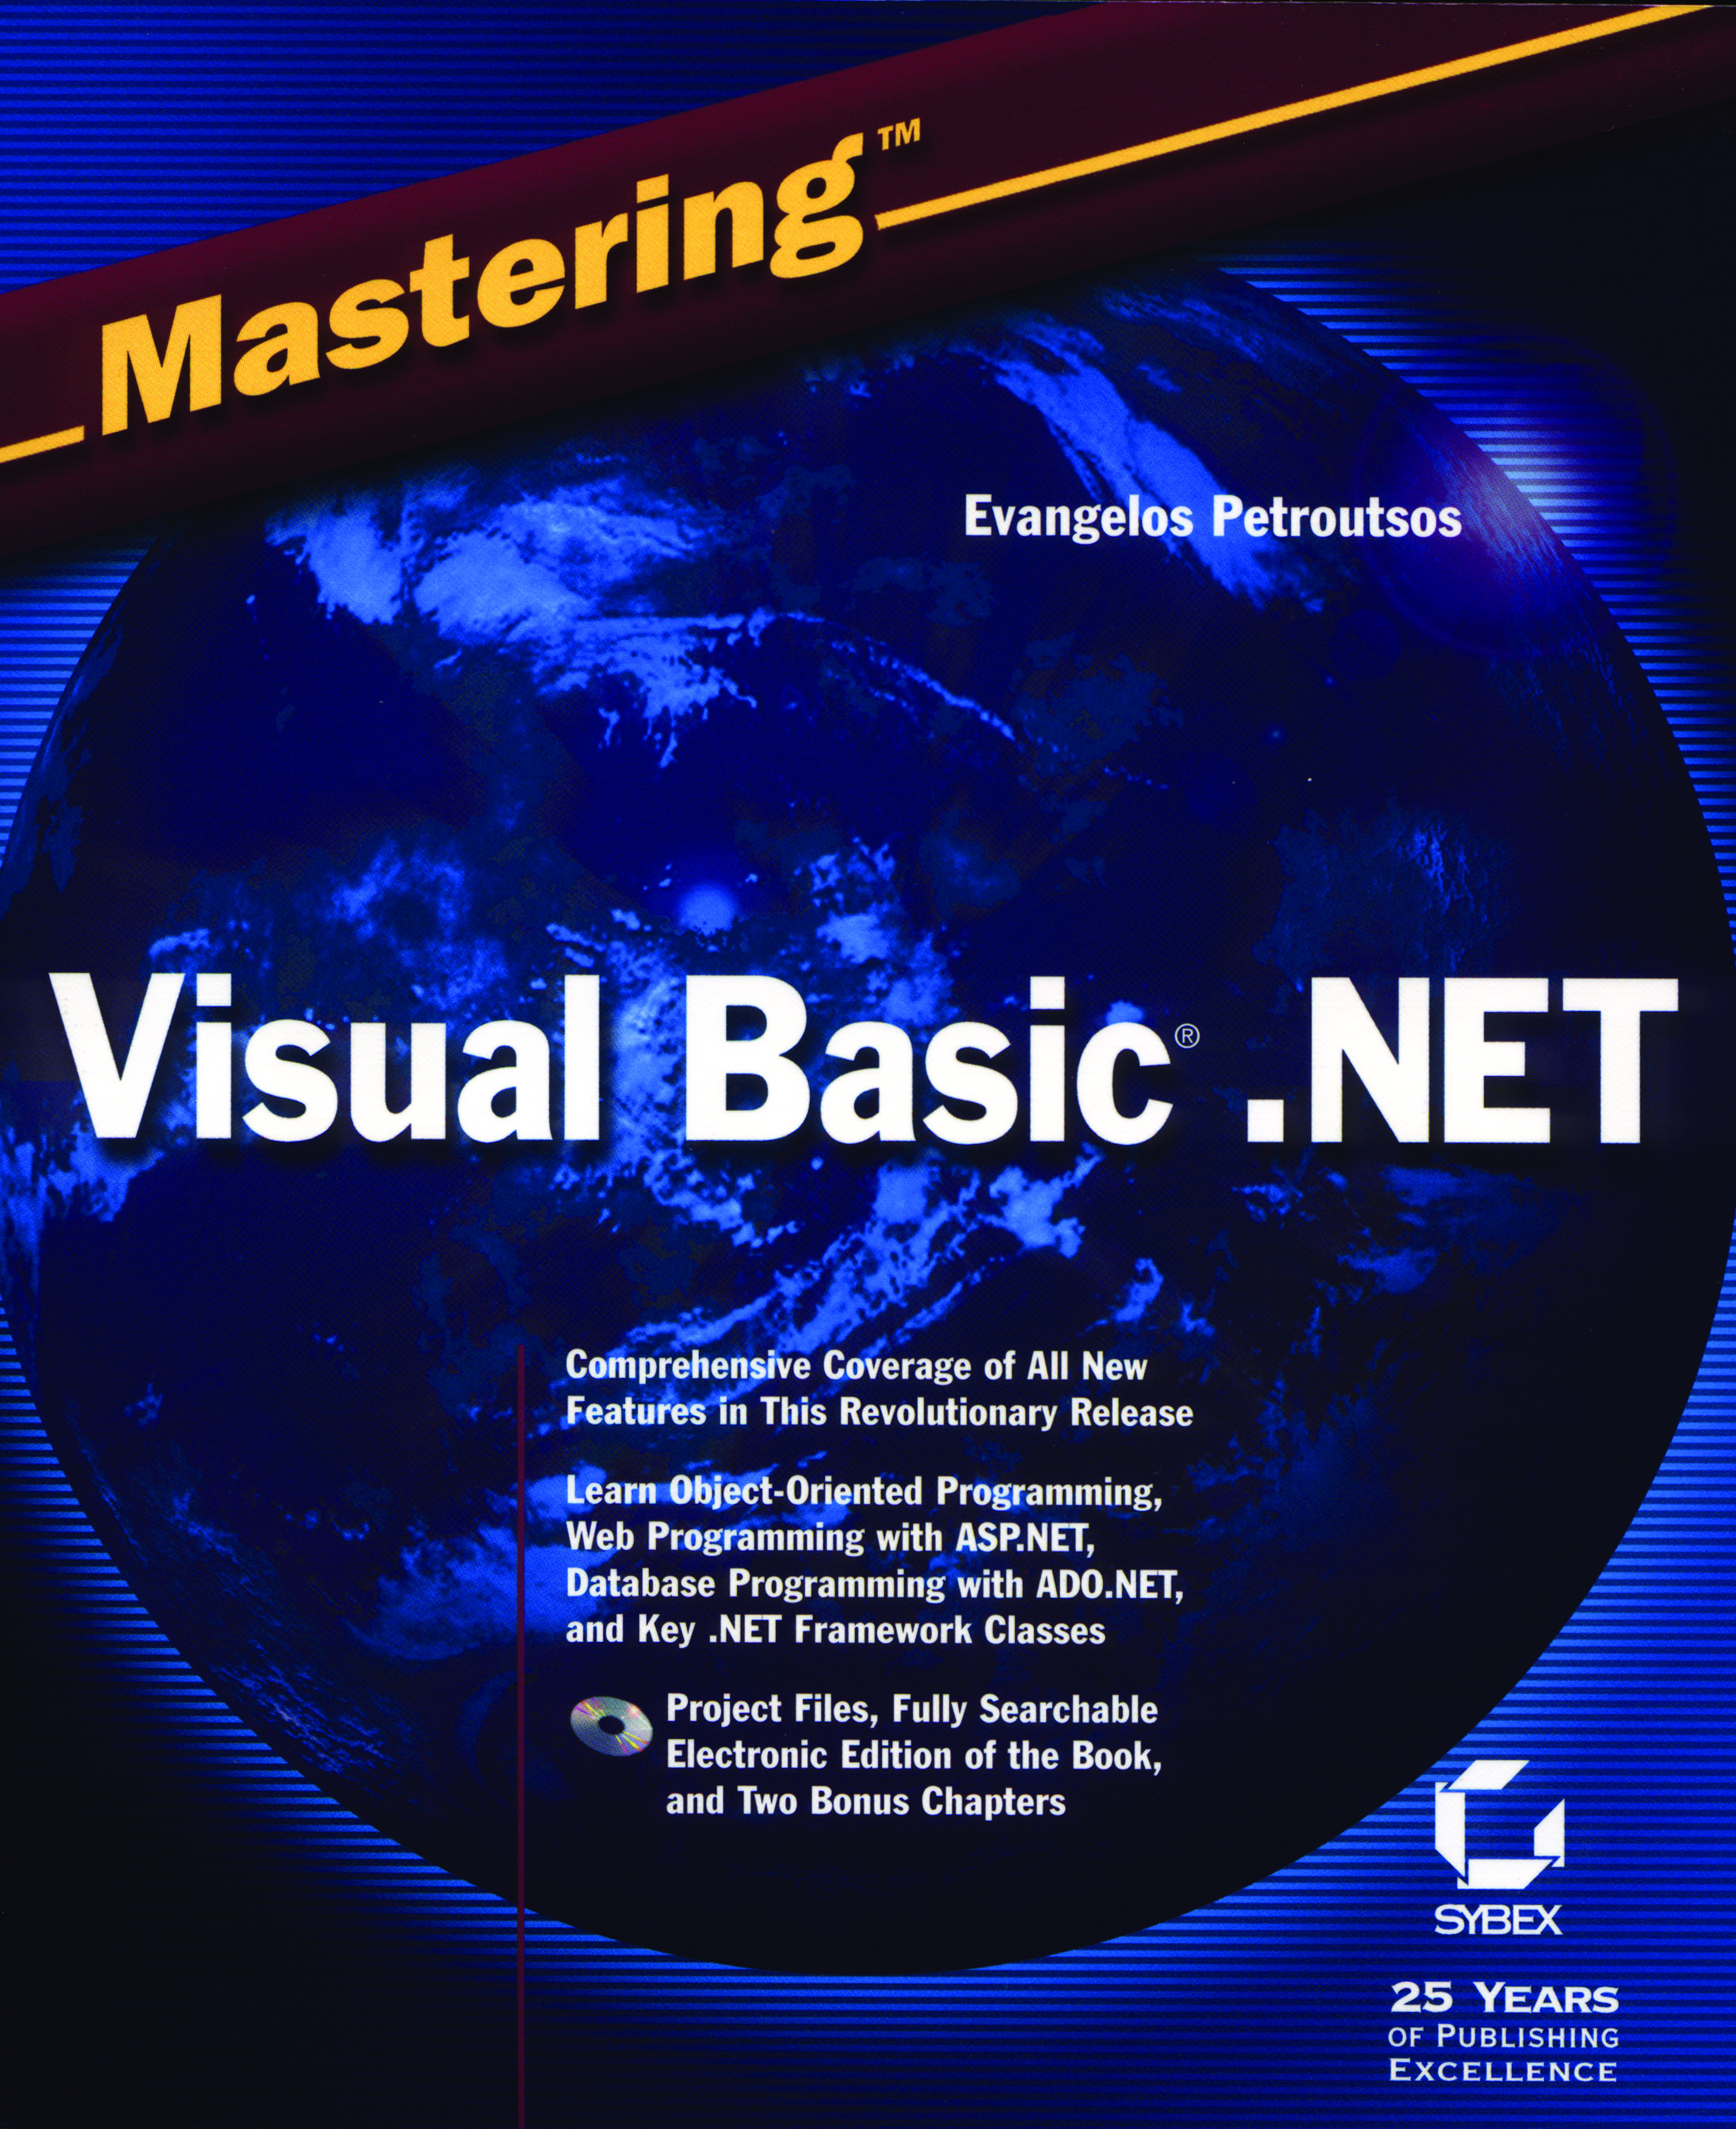 Mastering Visual Basic .NET 2002